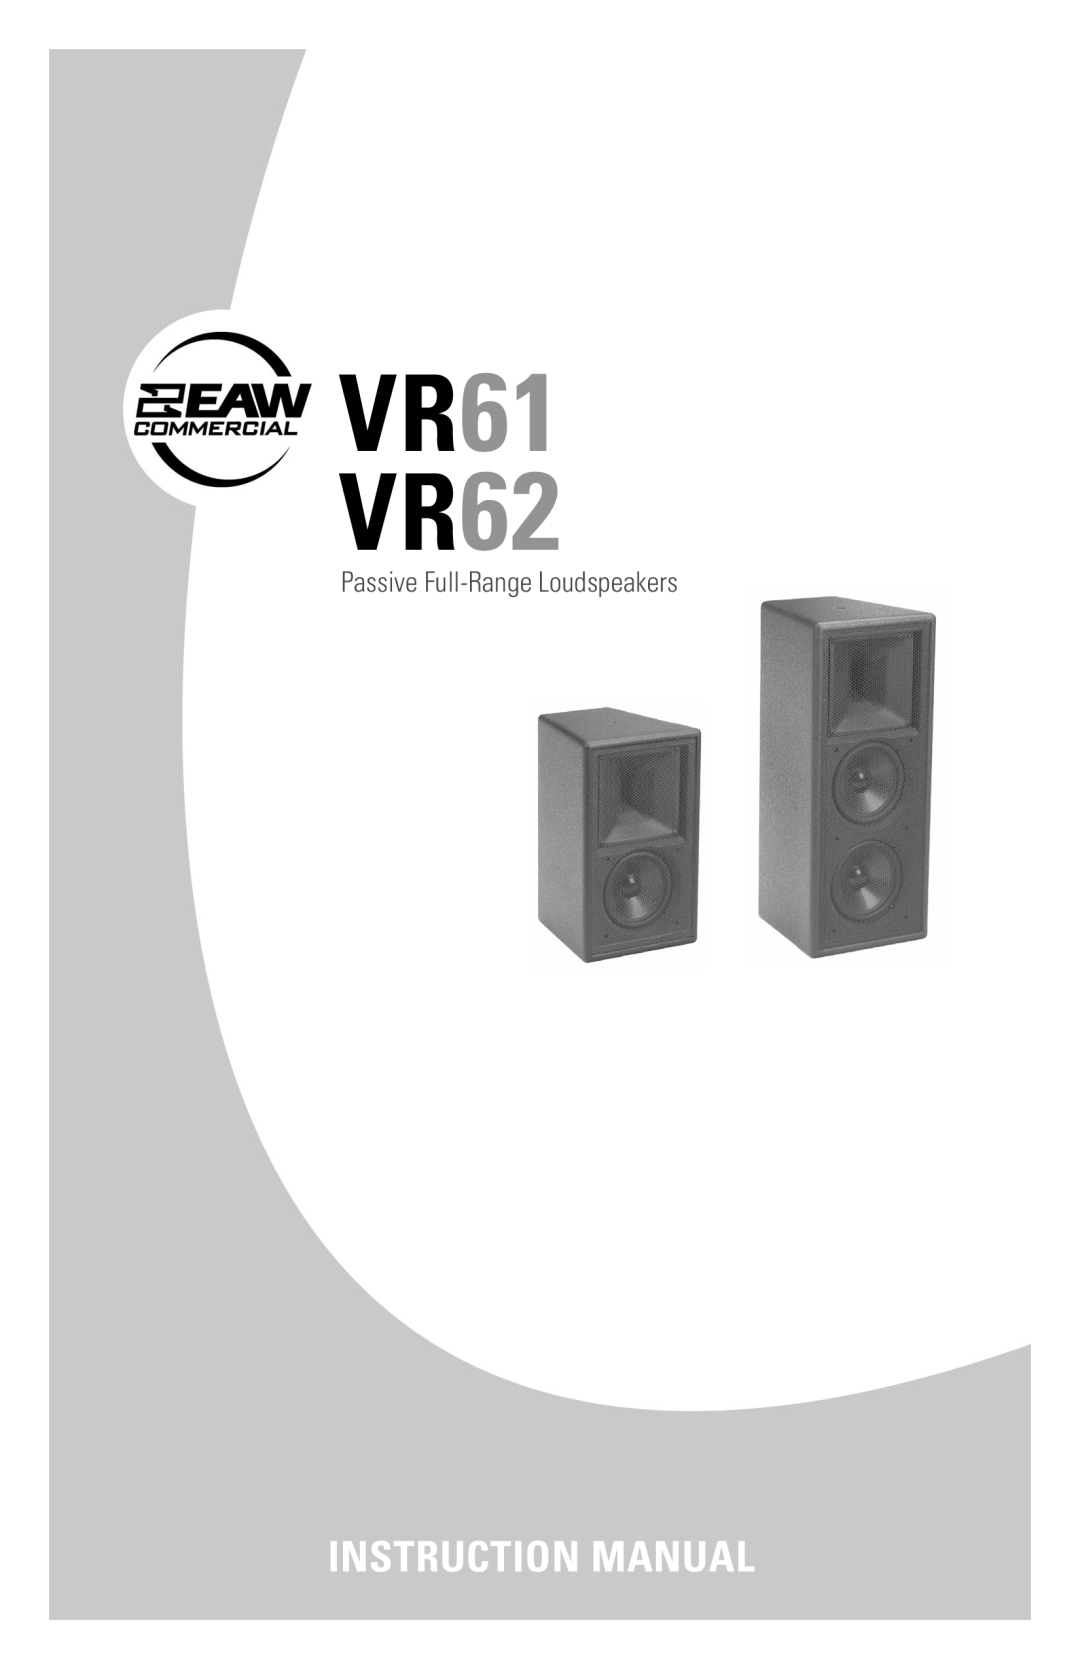 Kenwood instruction manual VR61 VR62, Passive Full-RangeLoudspeakers 